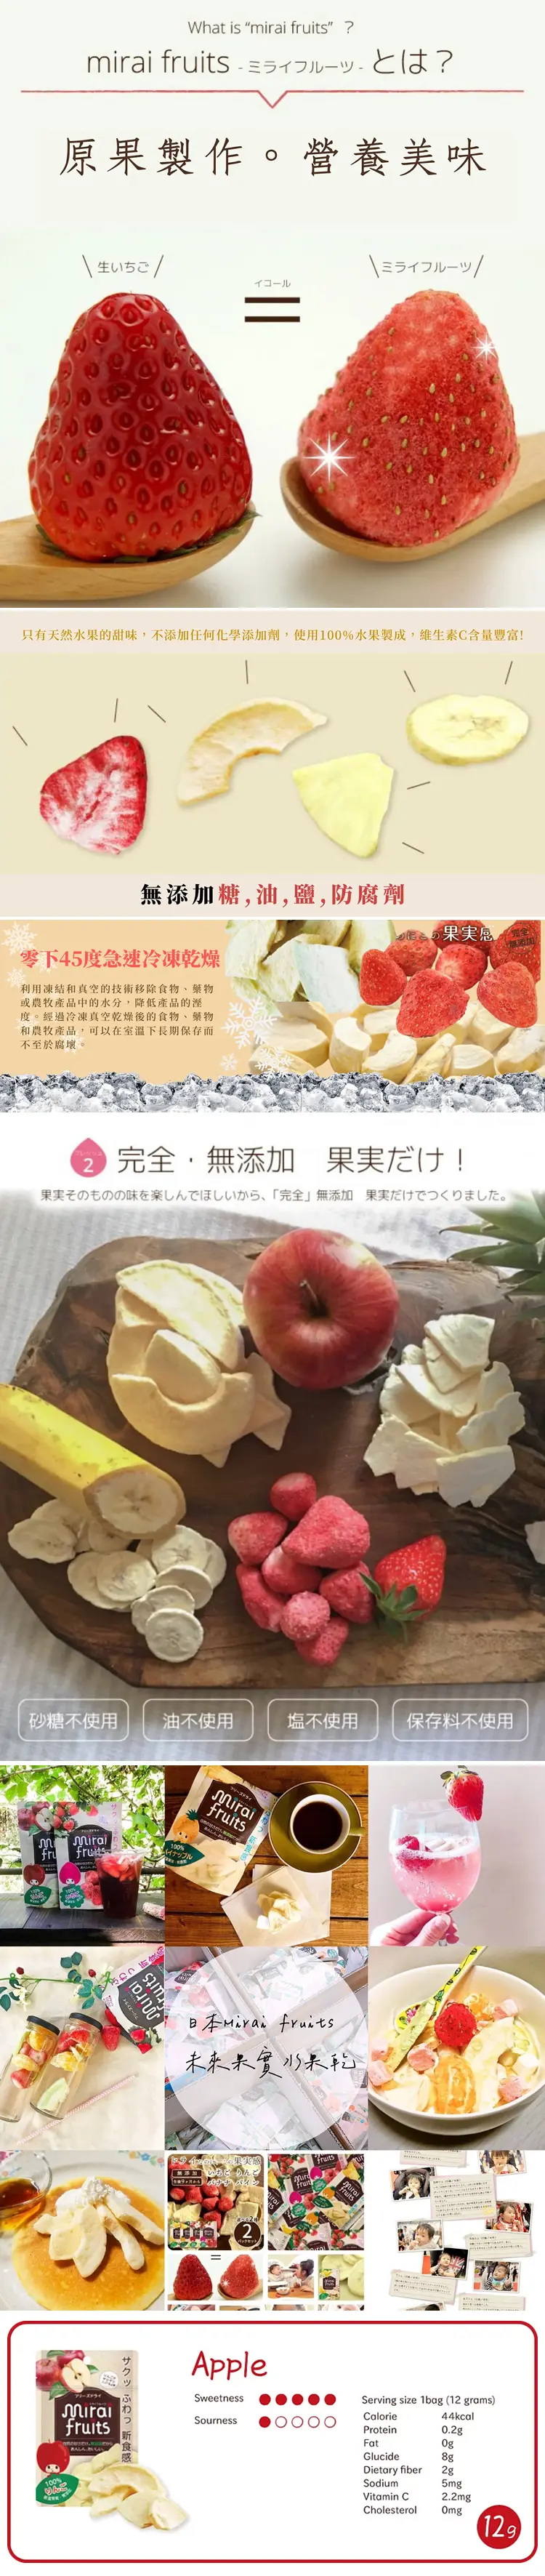 mirai fruits 未來果實水果乾;蘋果 12g